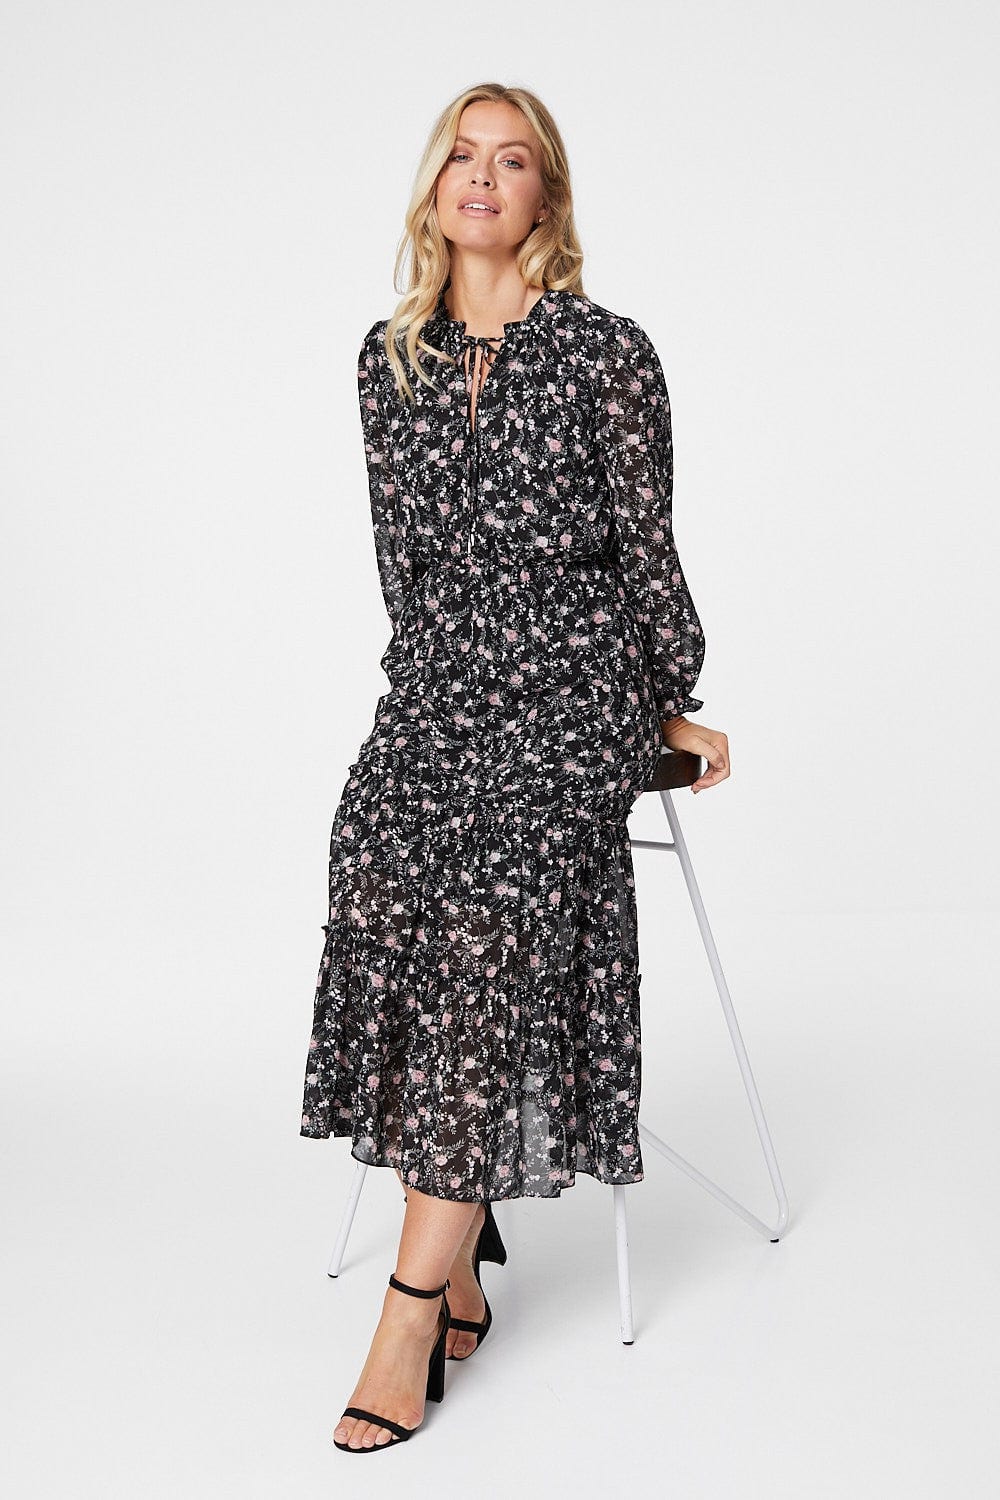 Black | Floral Long Sleeve Midi Dress : Model is 5'10"/178 cm and wears UK8/EU36/US4/AUS8